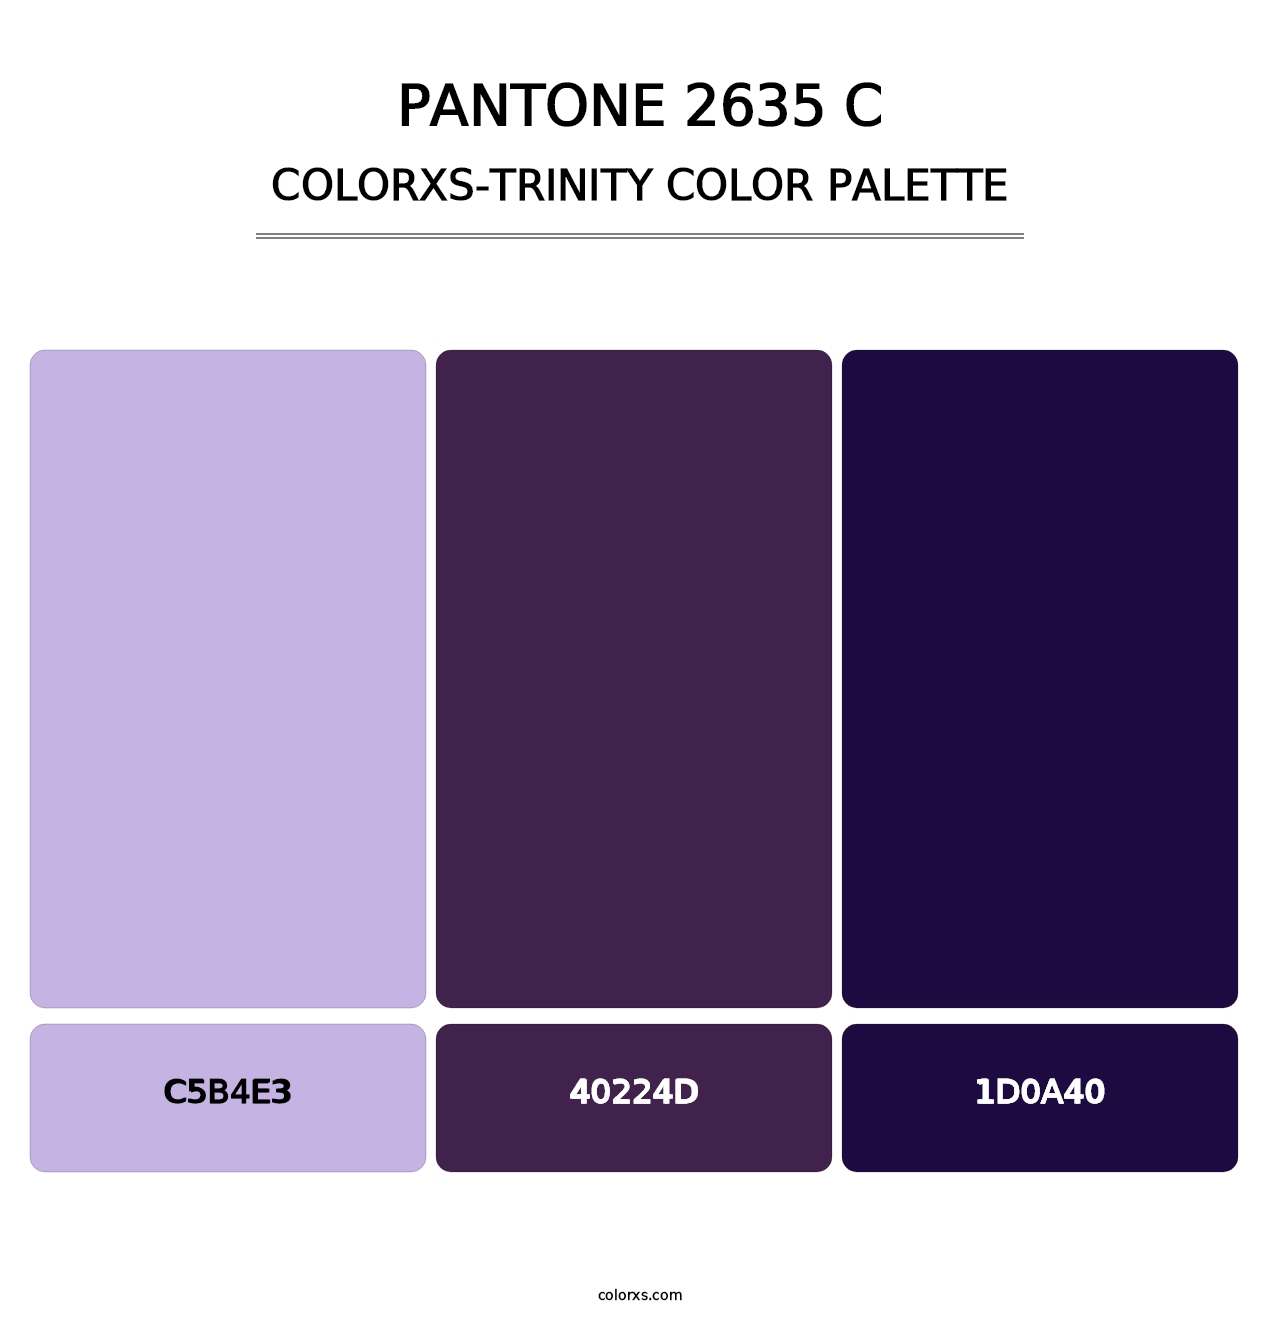 PANTONE 2635 C - Colorxs Trinity Palette